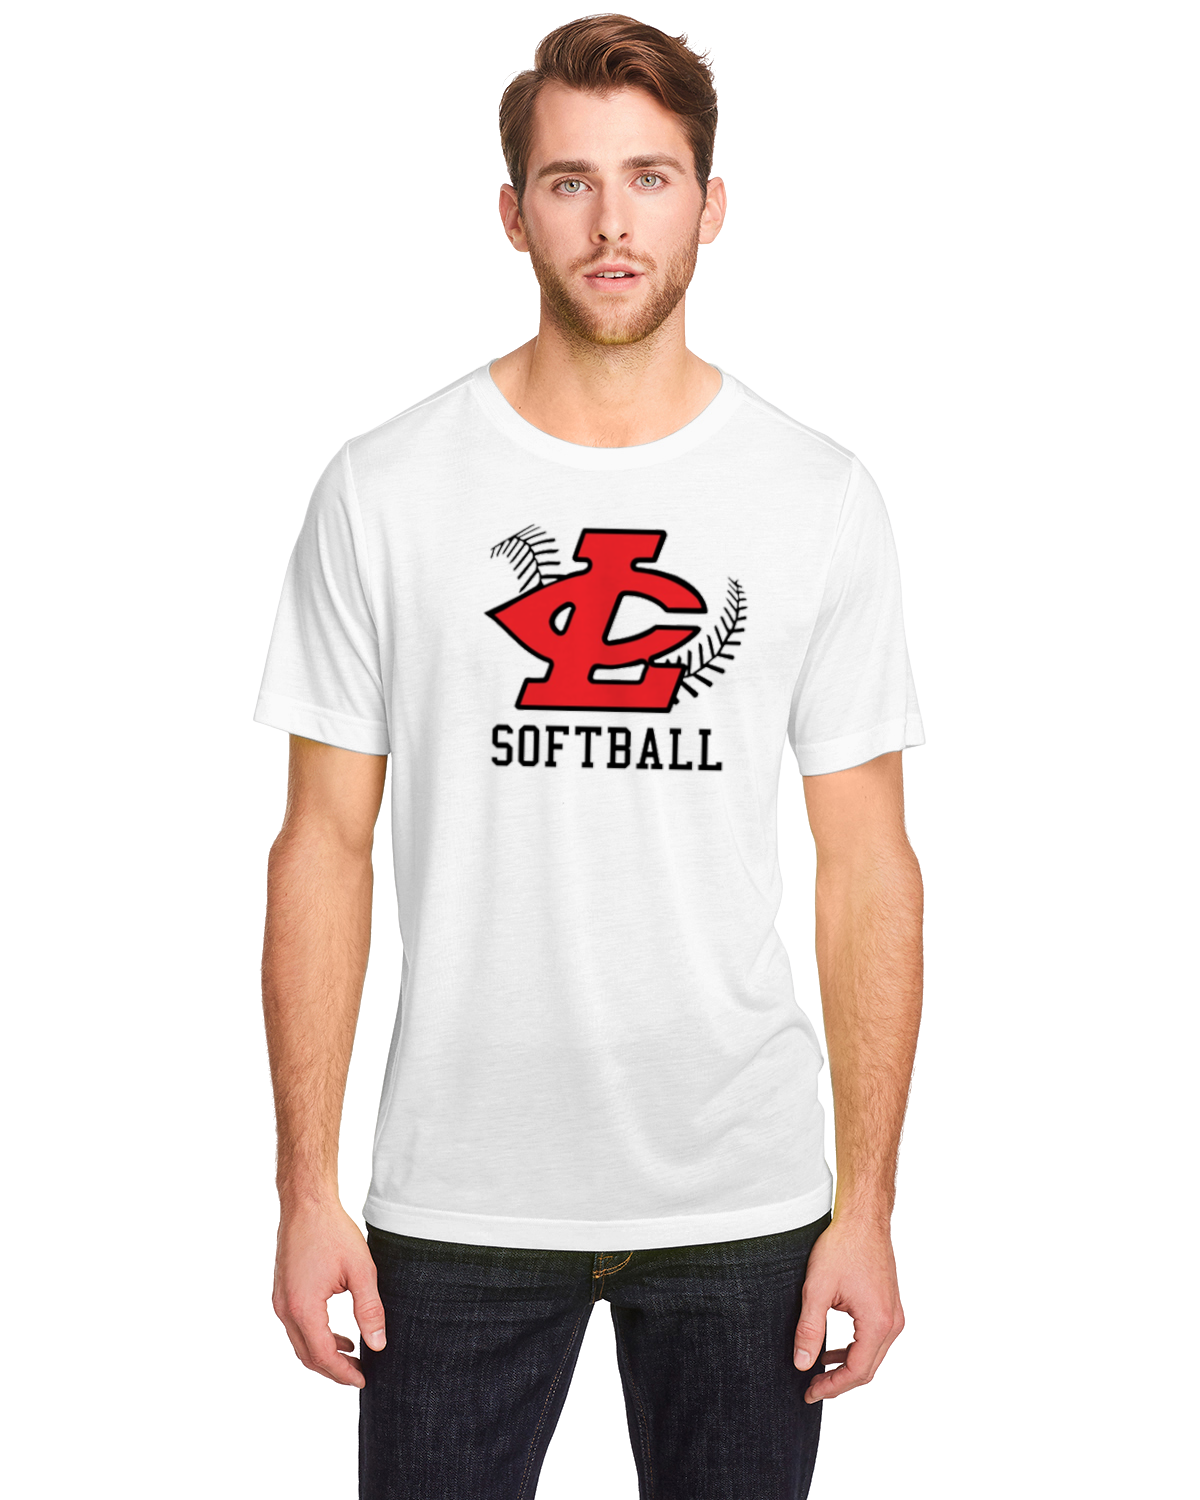 CLLL Softball Unisex Performance Tshirt TALL SIZES Gildan Ultra Cotton WHITE